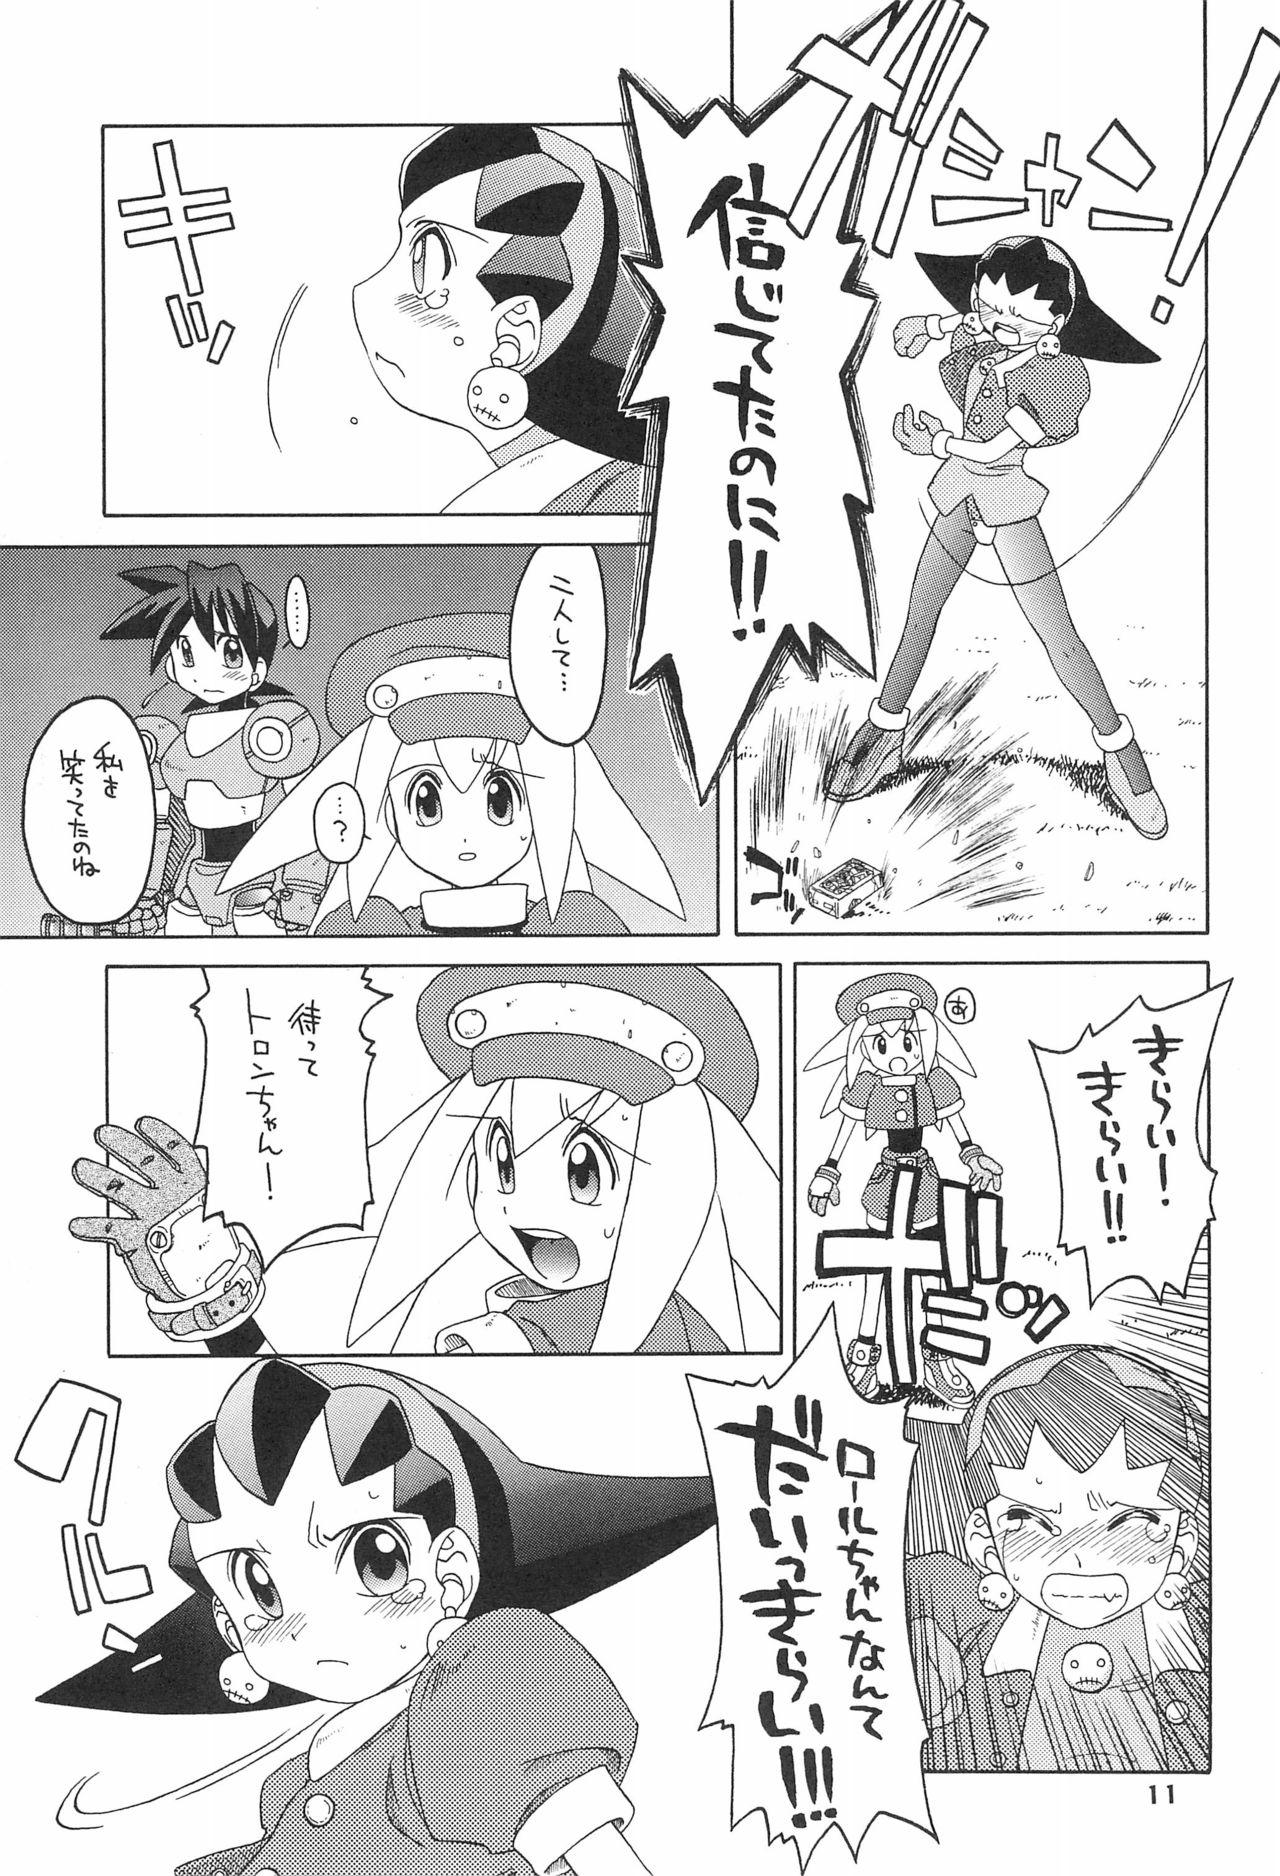 Topless Kinjirareta Asobi - Mega man legends Concha - Page 11